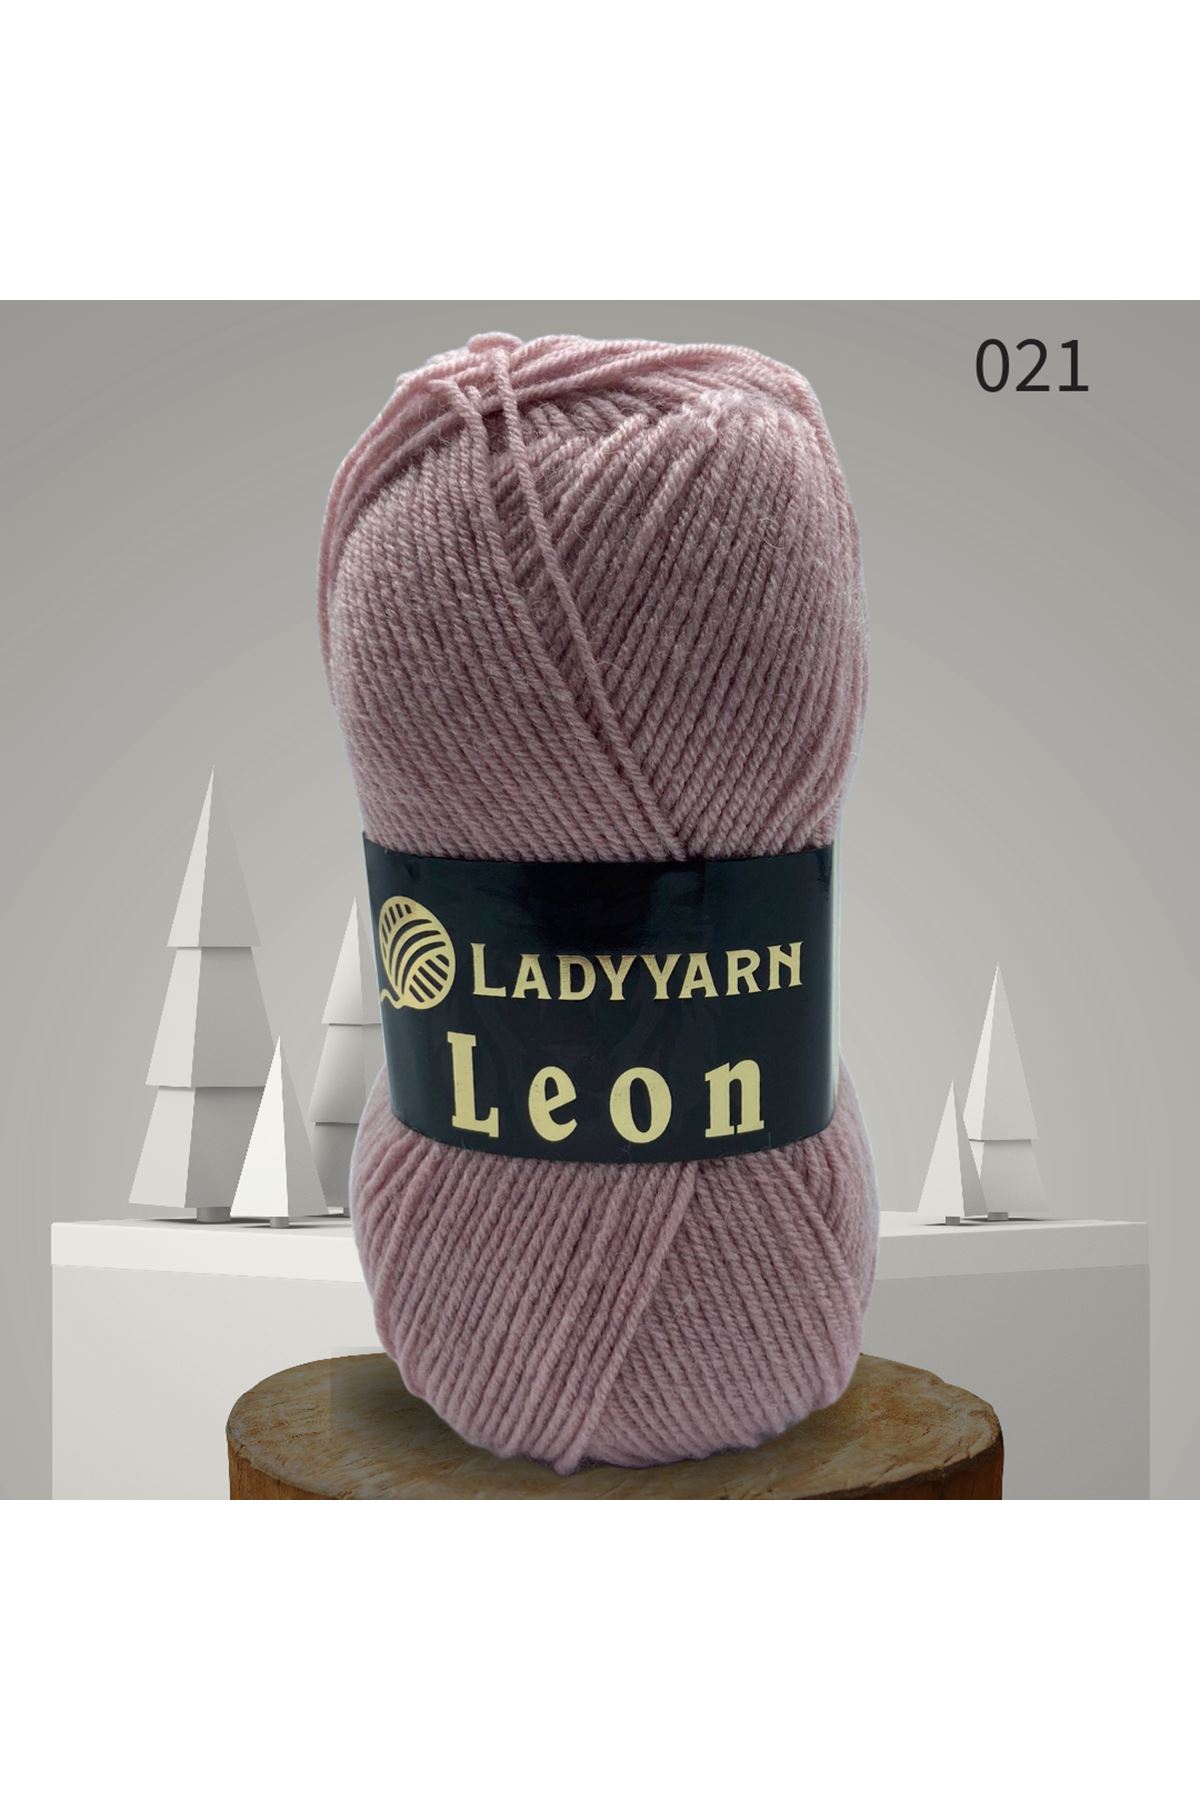 Lady Yarn Leon %49 Yünlü 021 Koyu Pudra